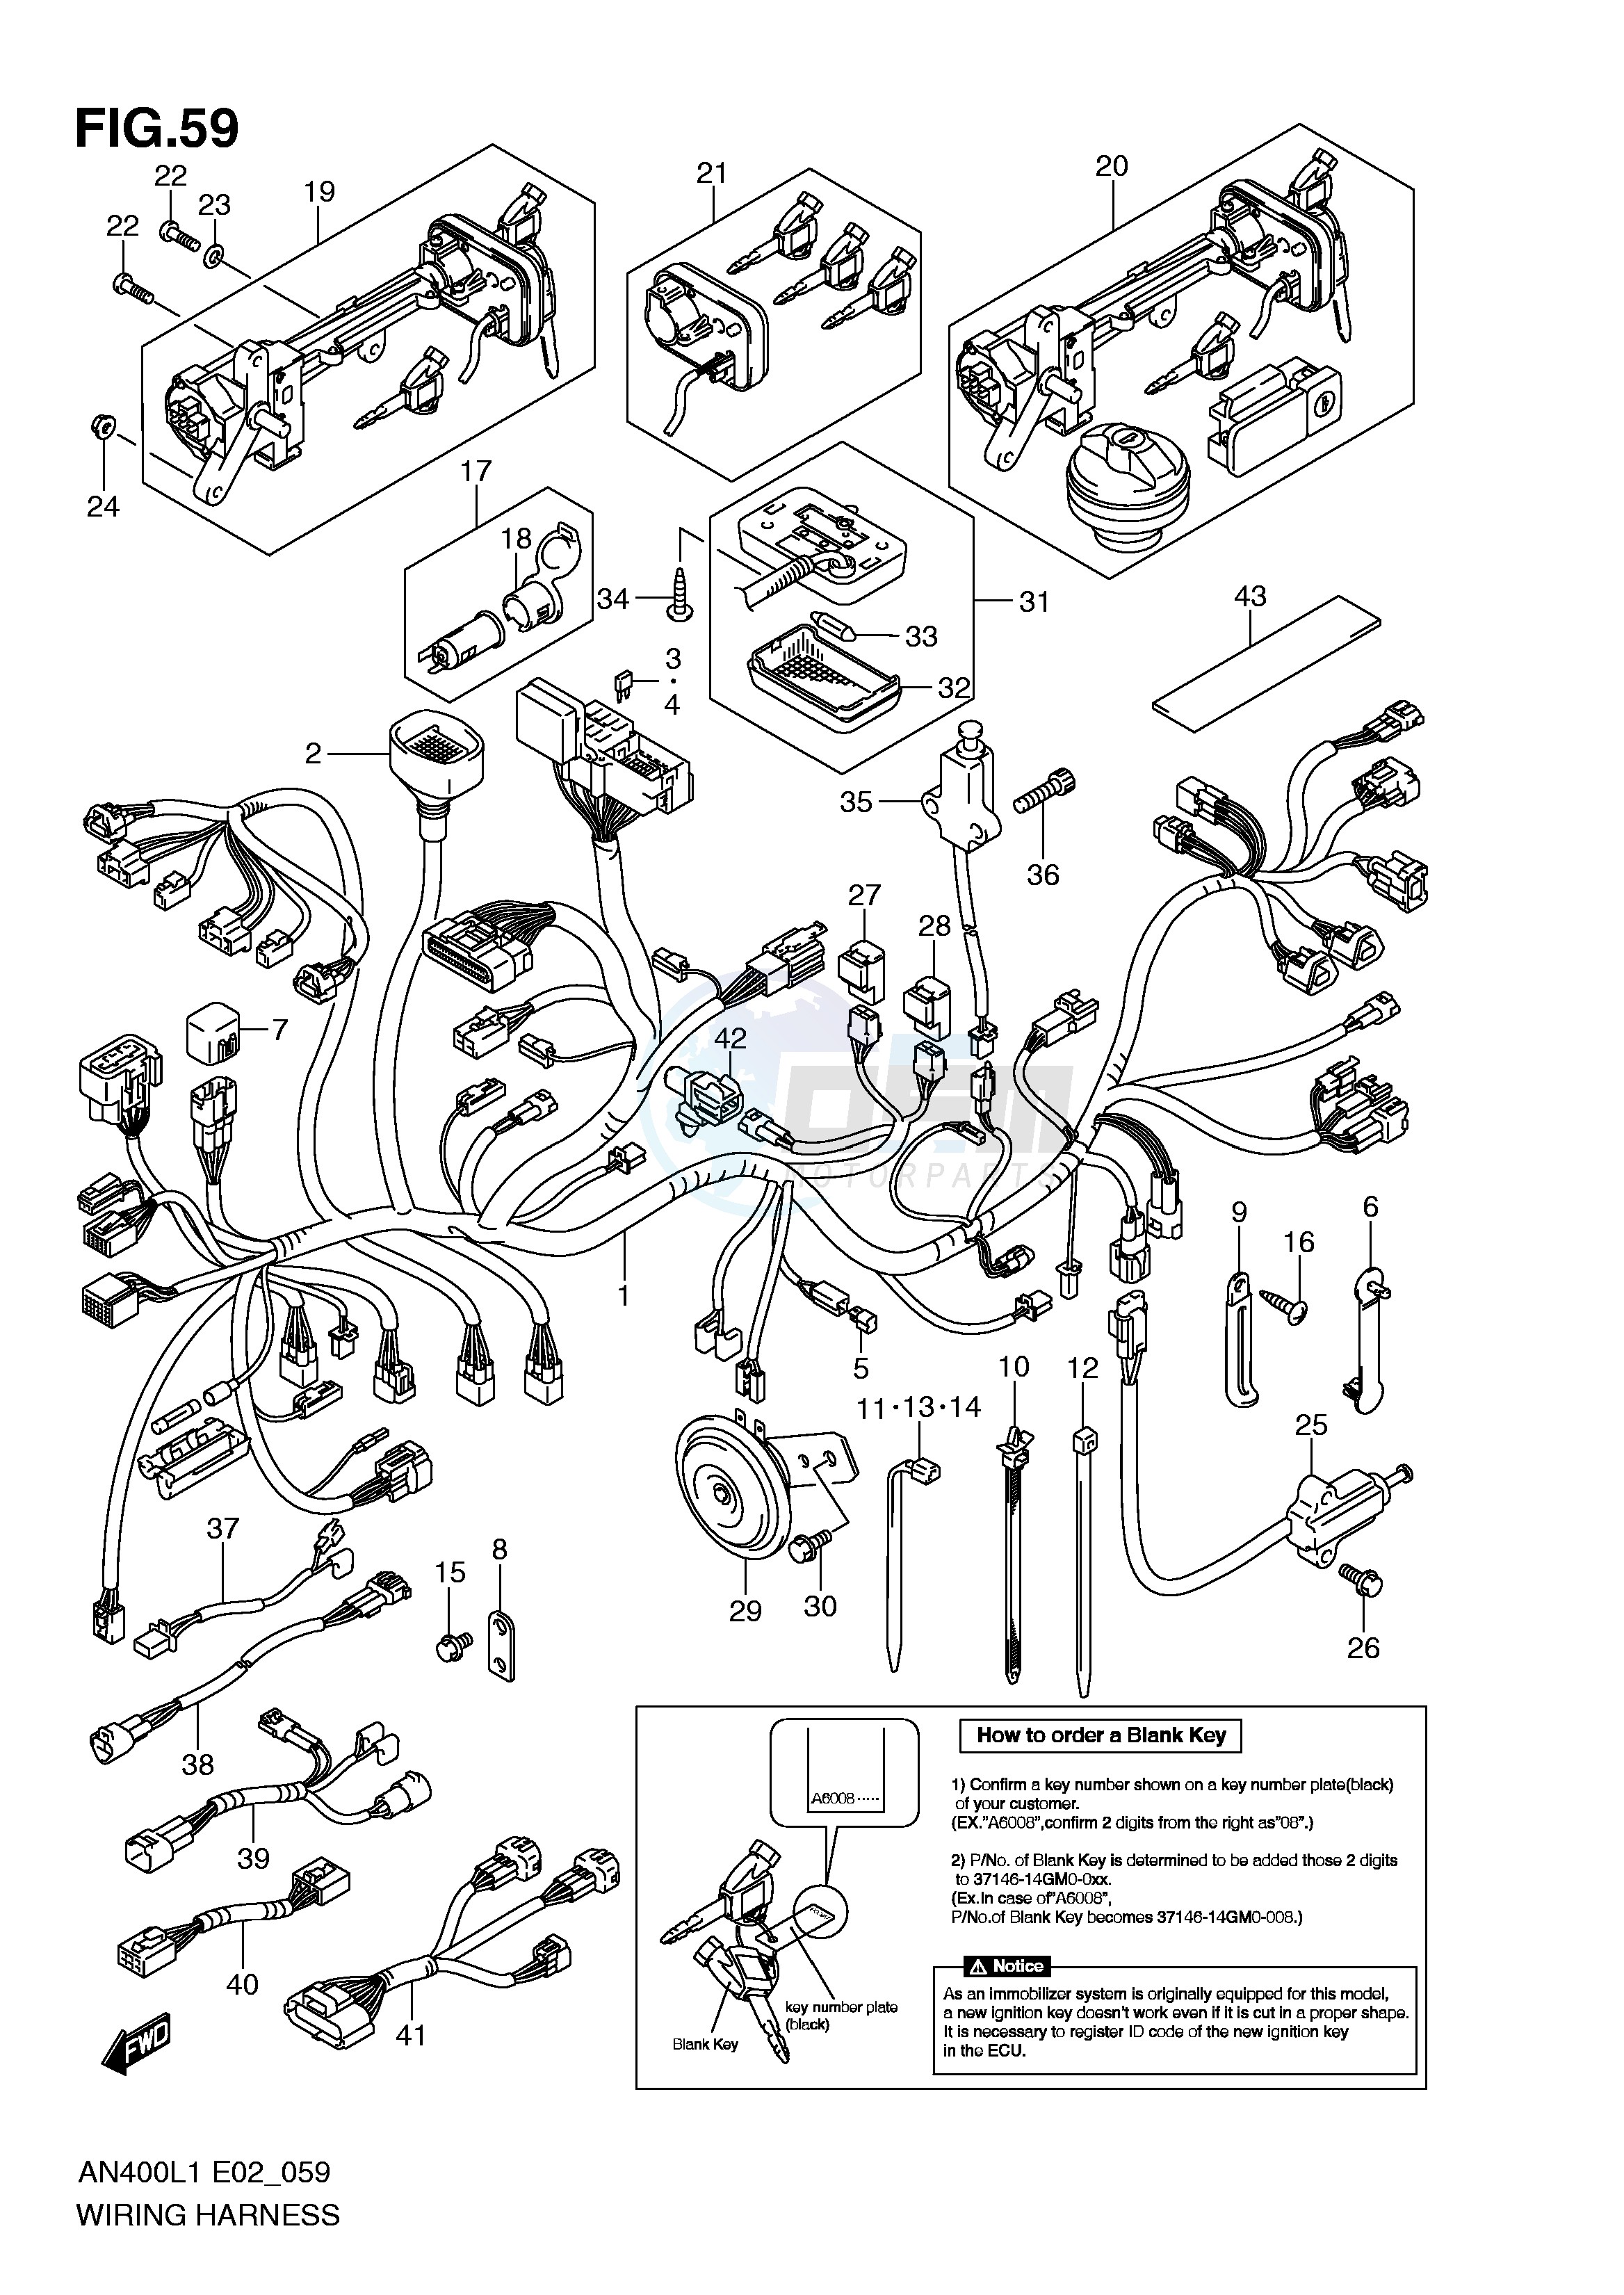 WIRING HARNESS (IMOBI) (AN400ZAL1 E51) blueprint